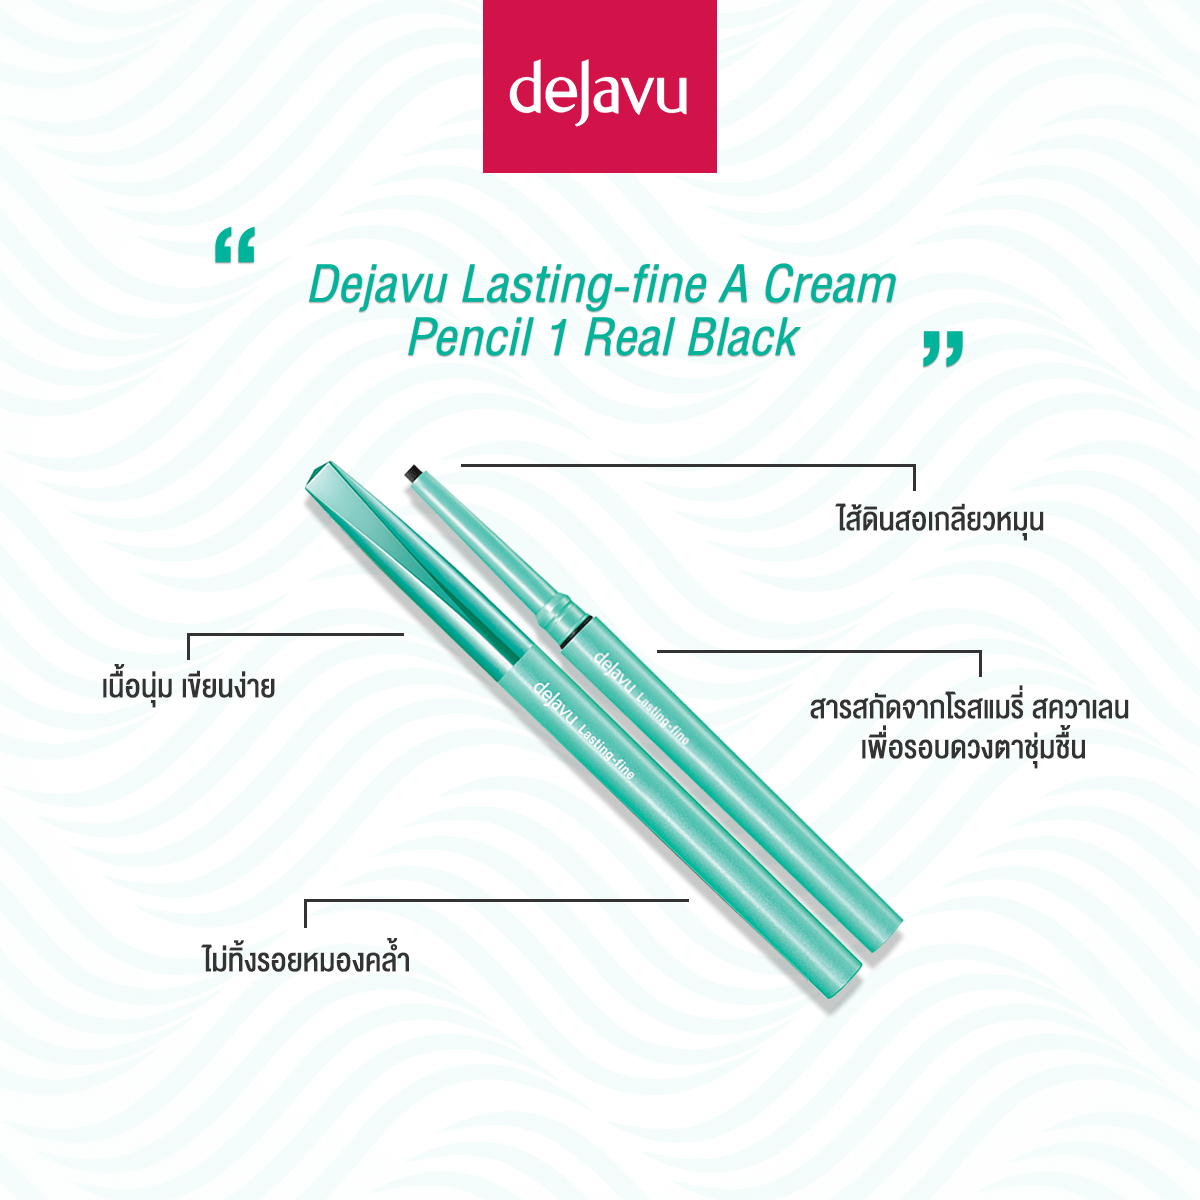 Dejavu,Dejavu Lasting-fine A Cream Pencil, Lasting-fine A Cream Pencil,อายไลเนอร์,อายไลเนอร์แบบดินสอ,เดจาวู,DejavuEyeliner